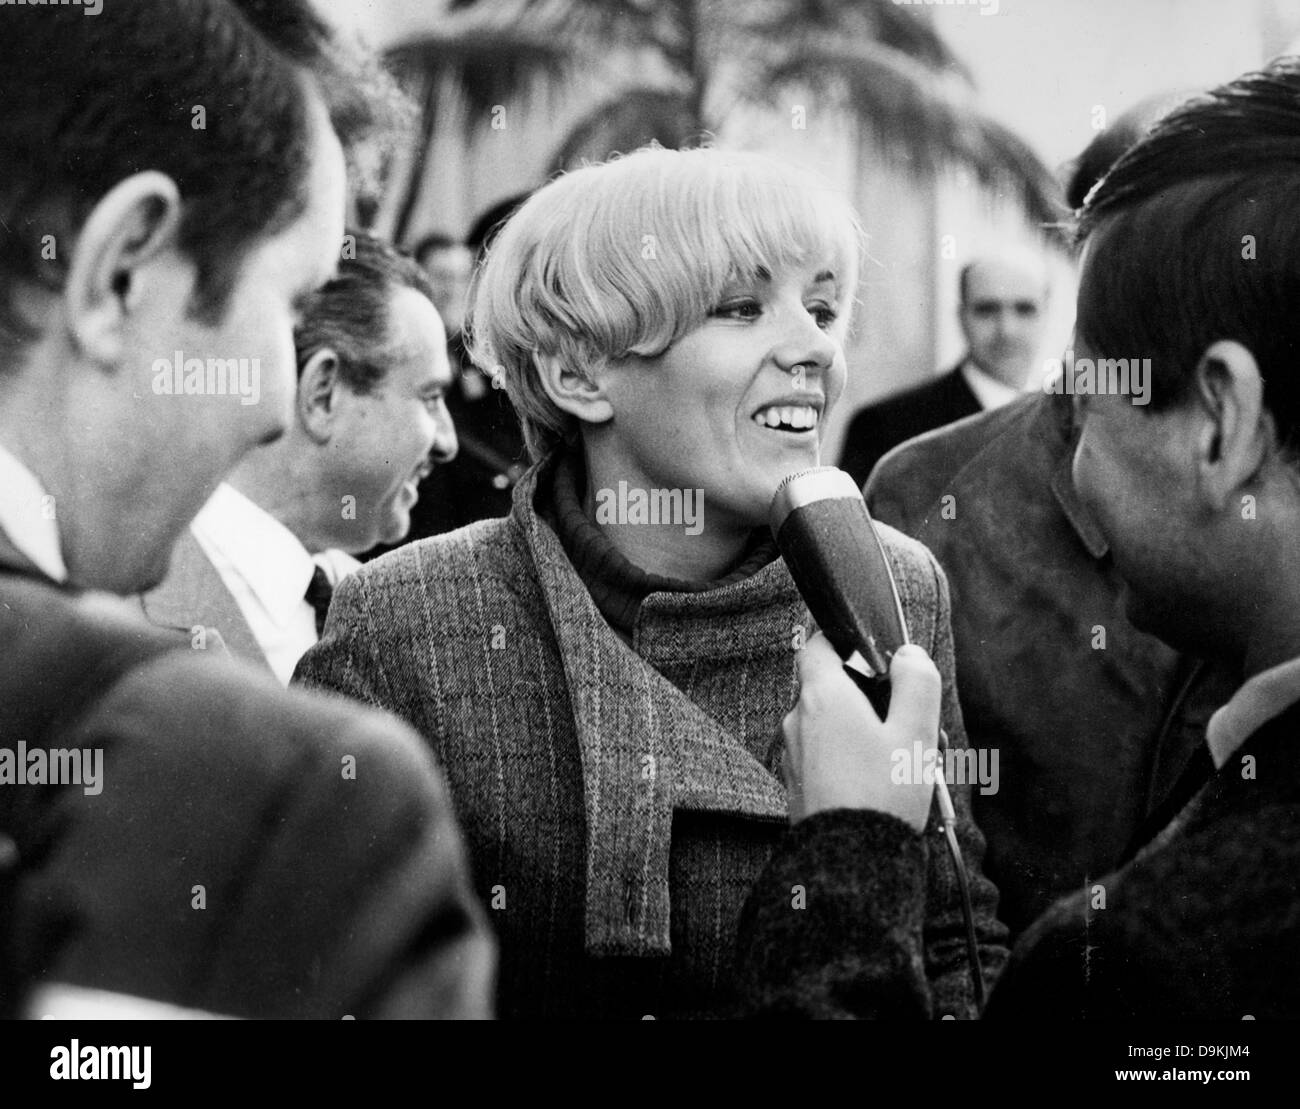 Caterina caselli,1967 Foto de stock